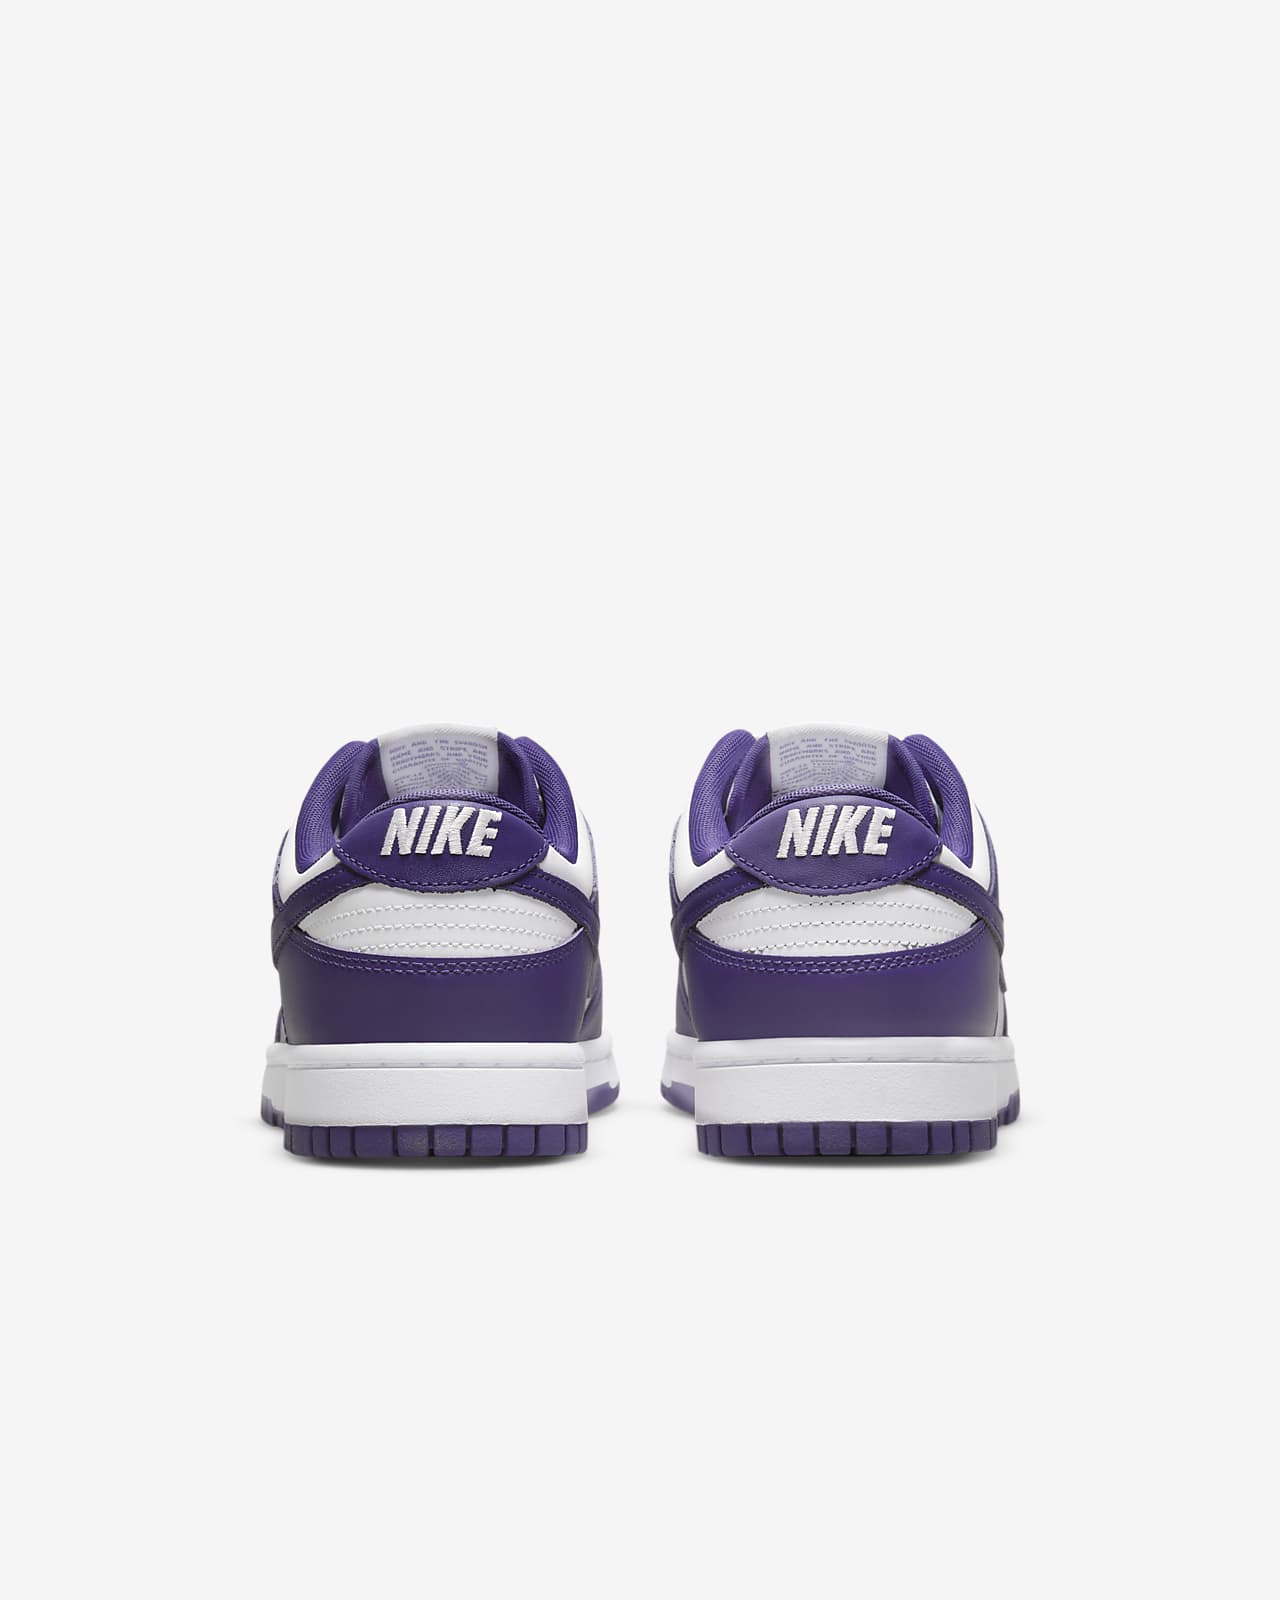 Nike SB Dunk Low Court Purple Sneakers for Men